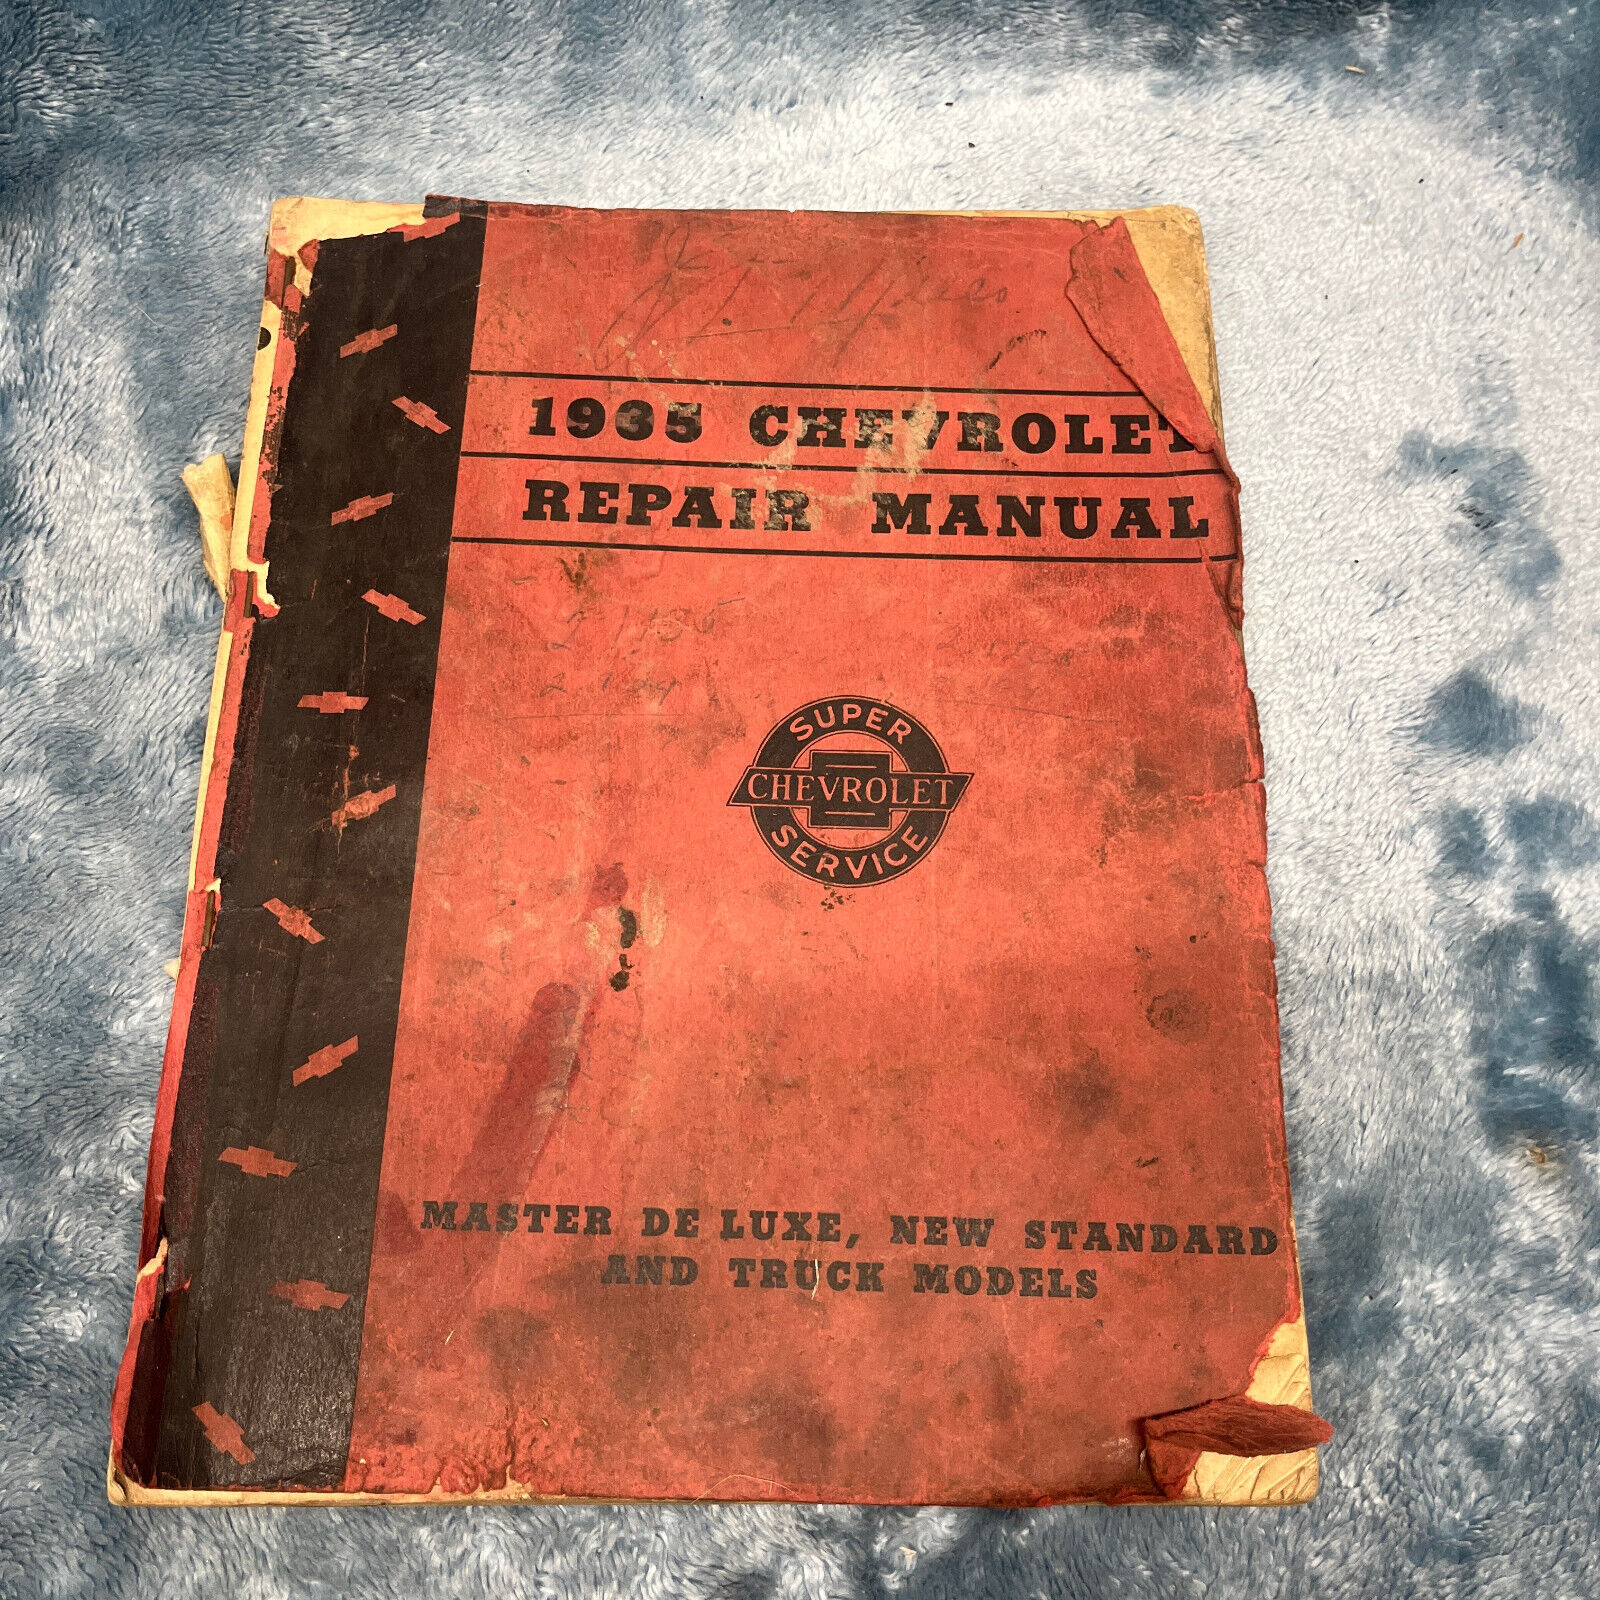 Orignal Vintage 1935 Chevy Factory Service Shop Manual Car Truck Repair Book